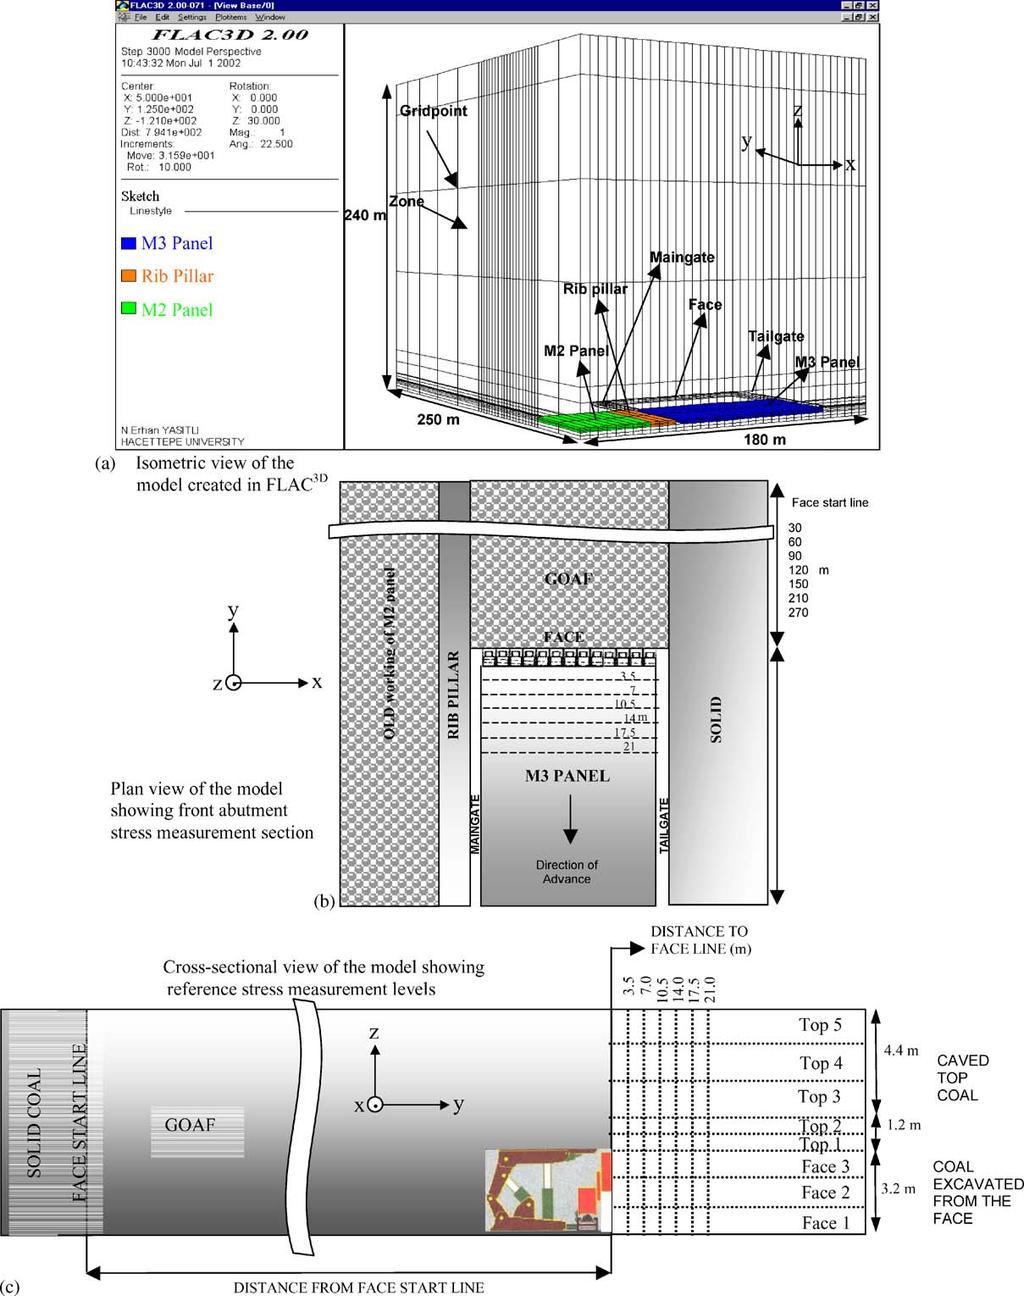 226 ARTICLE IN PRESS N.E. Yasitli, B. Unver / International Journal of Rock Mechanics & Mining Sciences 42 (2005) 219 235 Fig. 10. Details of model geometry of Omerler Underground Mine.